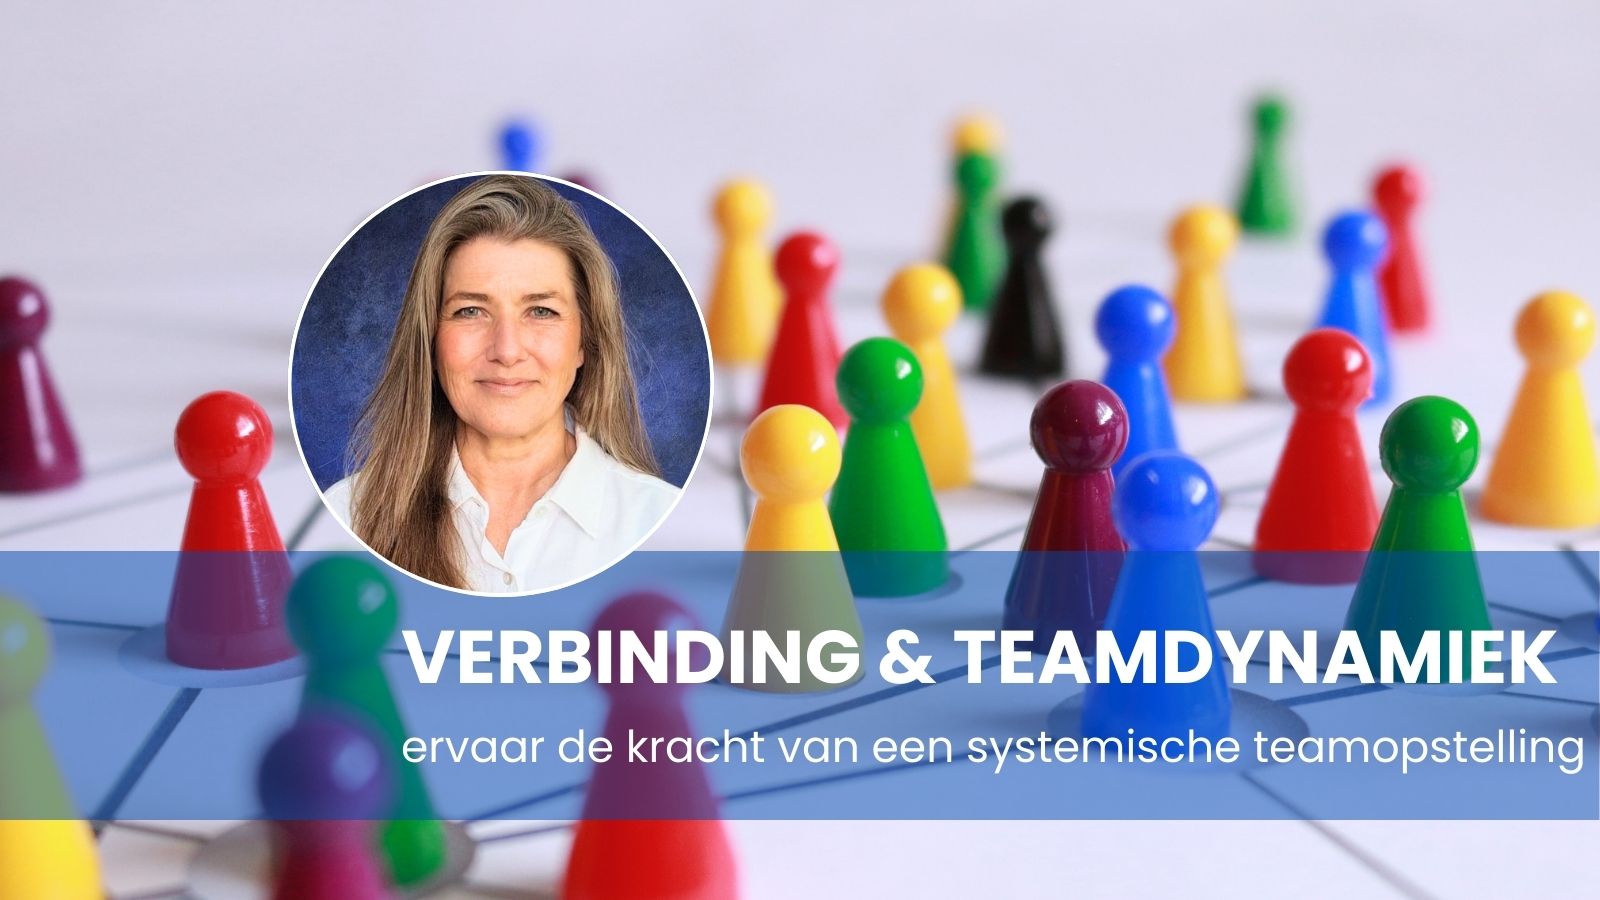 Bedrijfsuitje Middelburg: Systemische teamopstelling